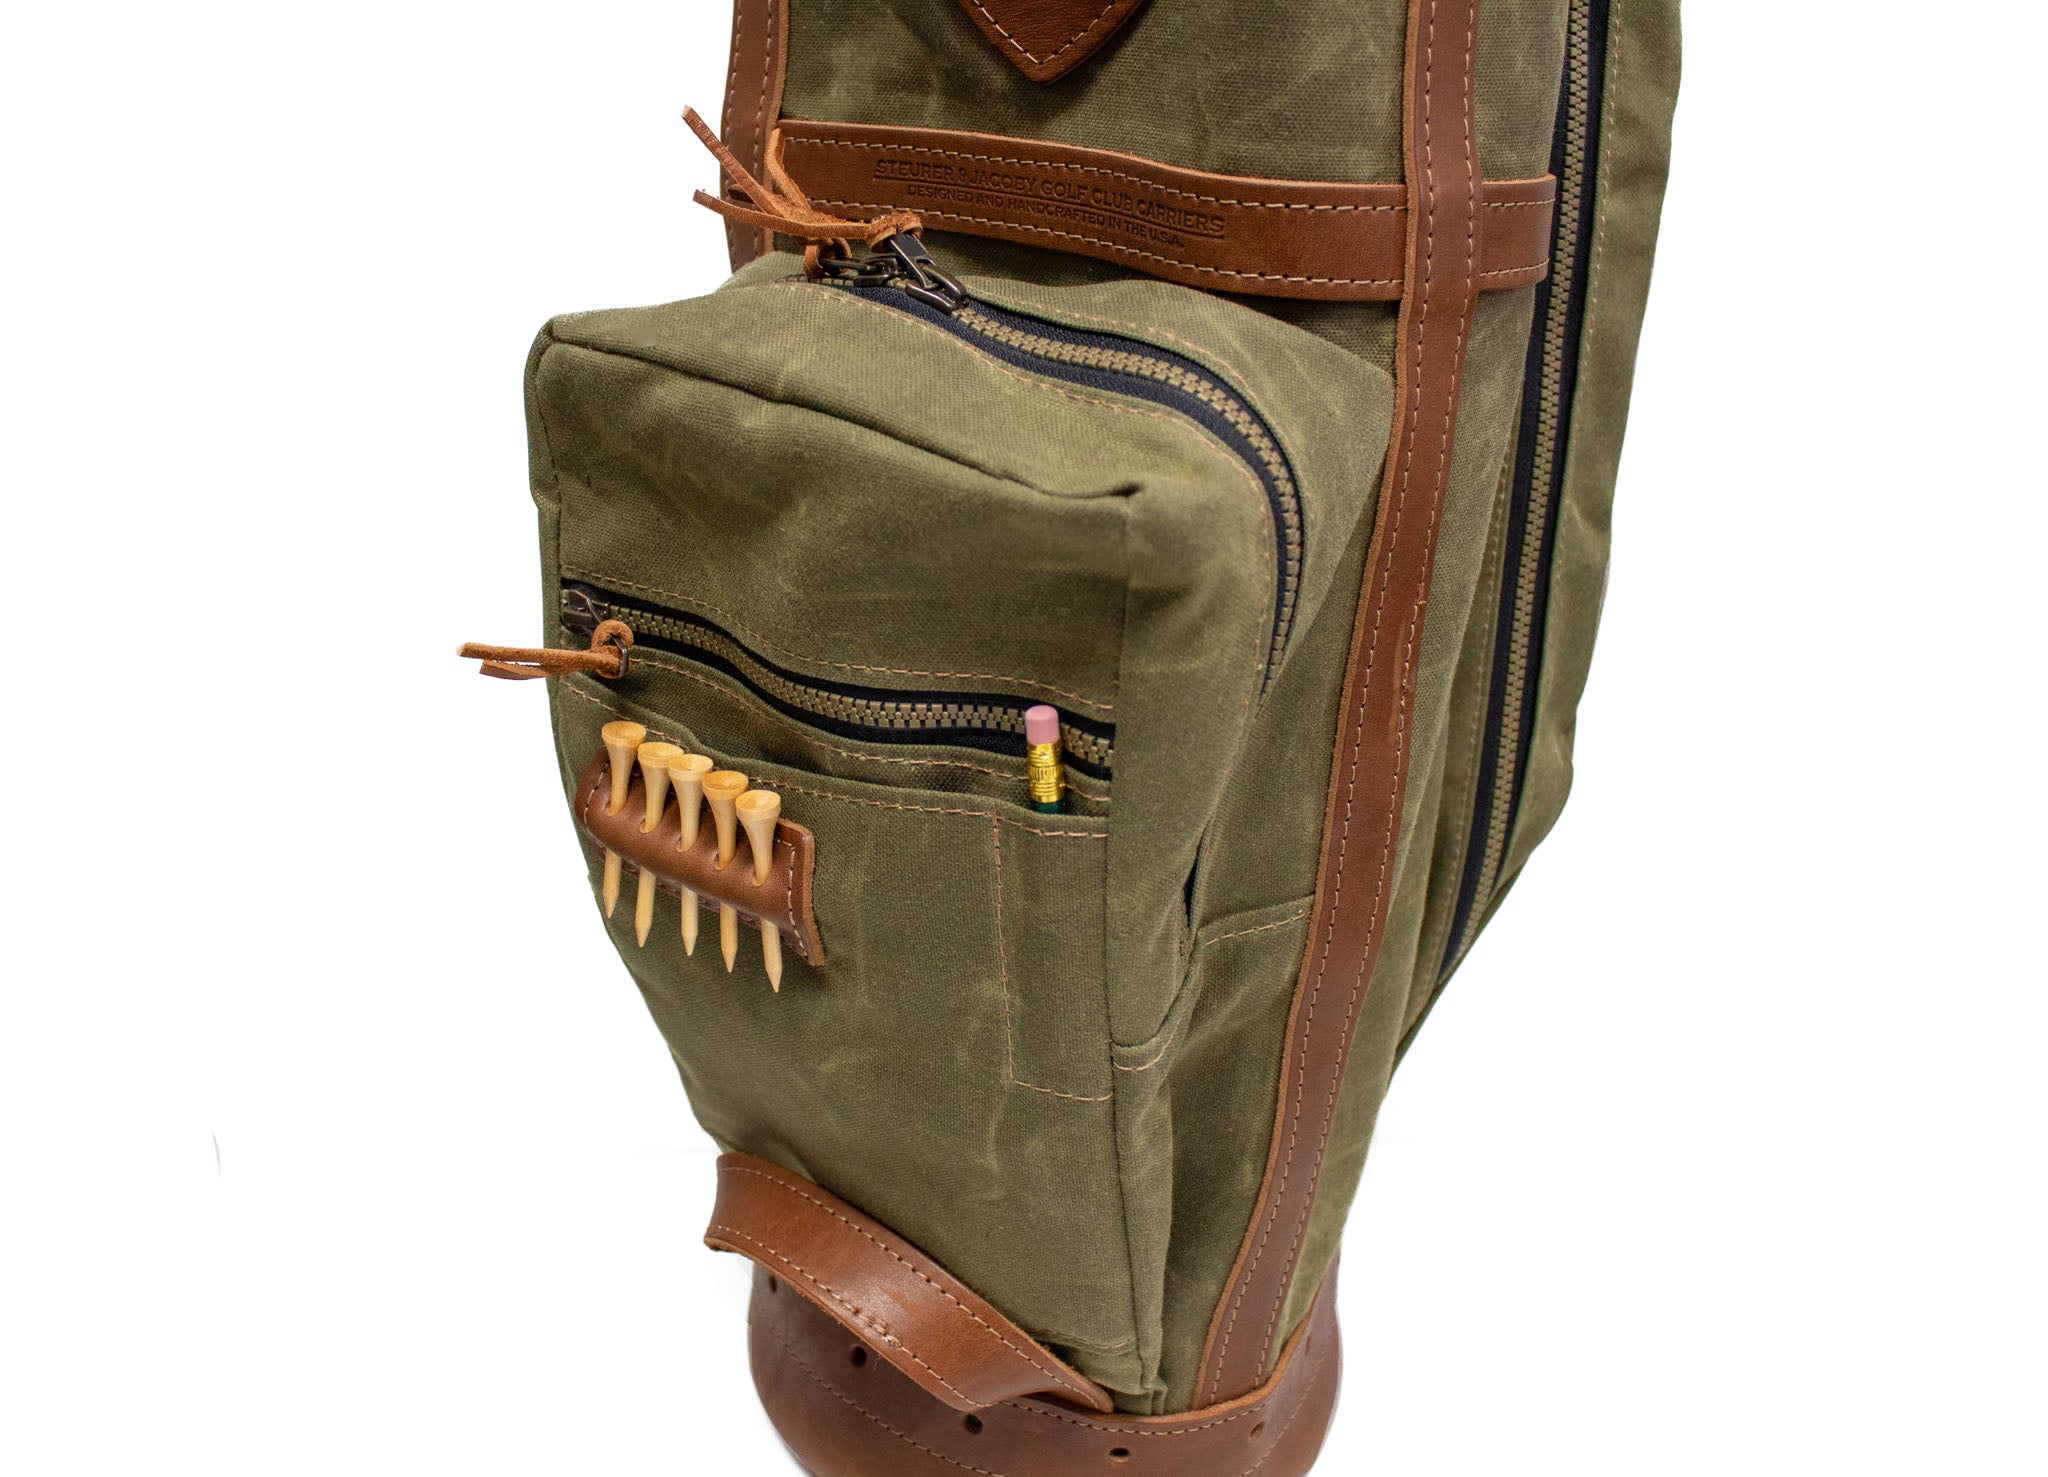 Custom Premium Leather Classic Staff Golf Bag